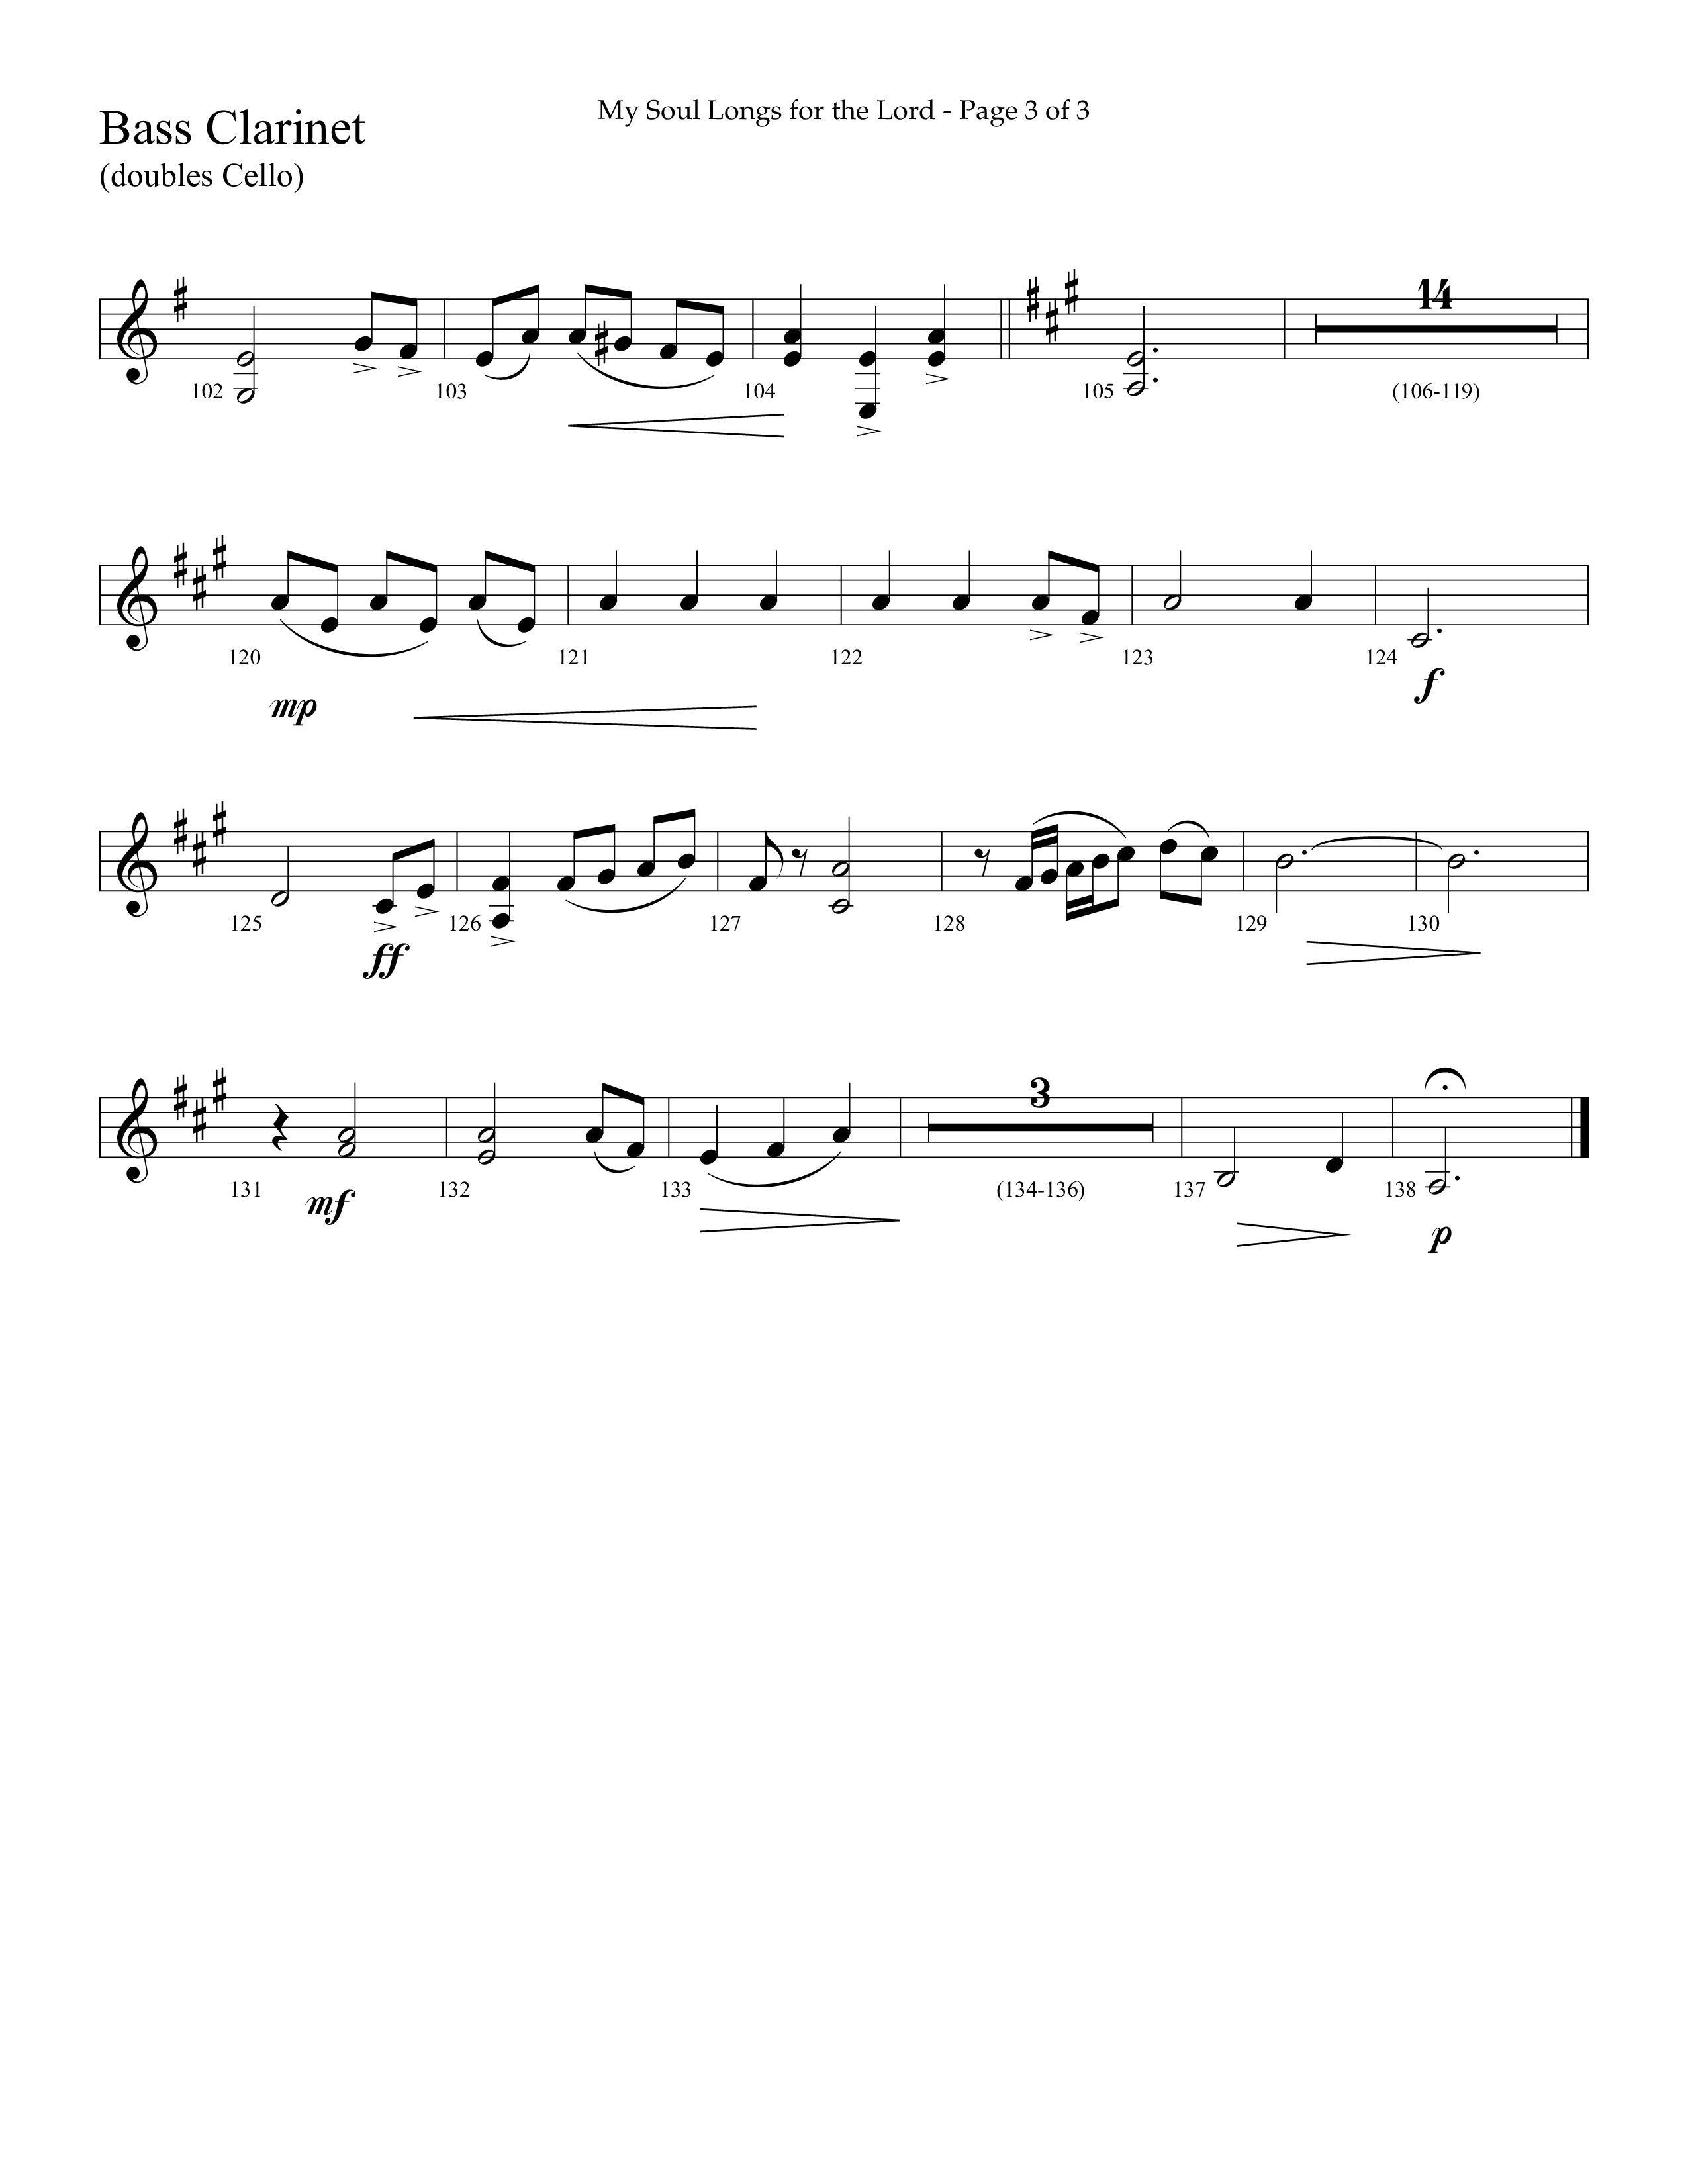 My Soul Longs For The Lord (Choral Anthem SATB) Bass Clarinet (Lifeway Choral / Arr. David Hamilton)